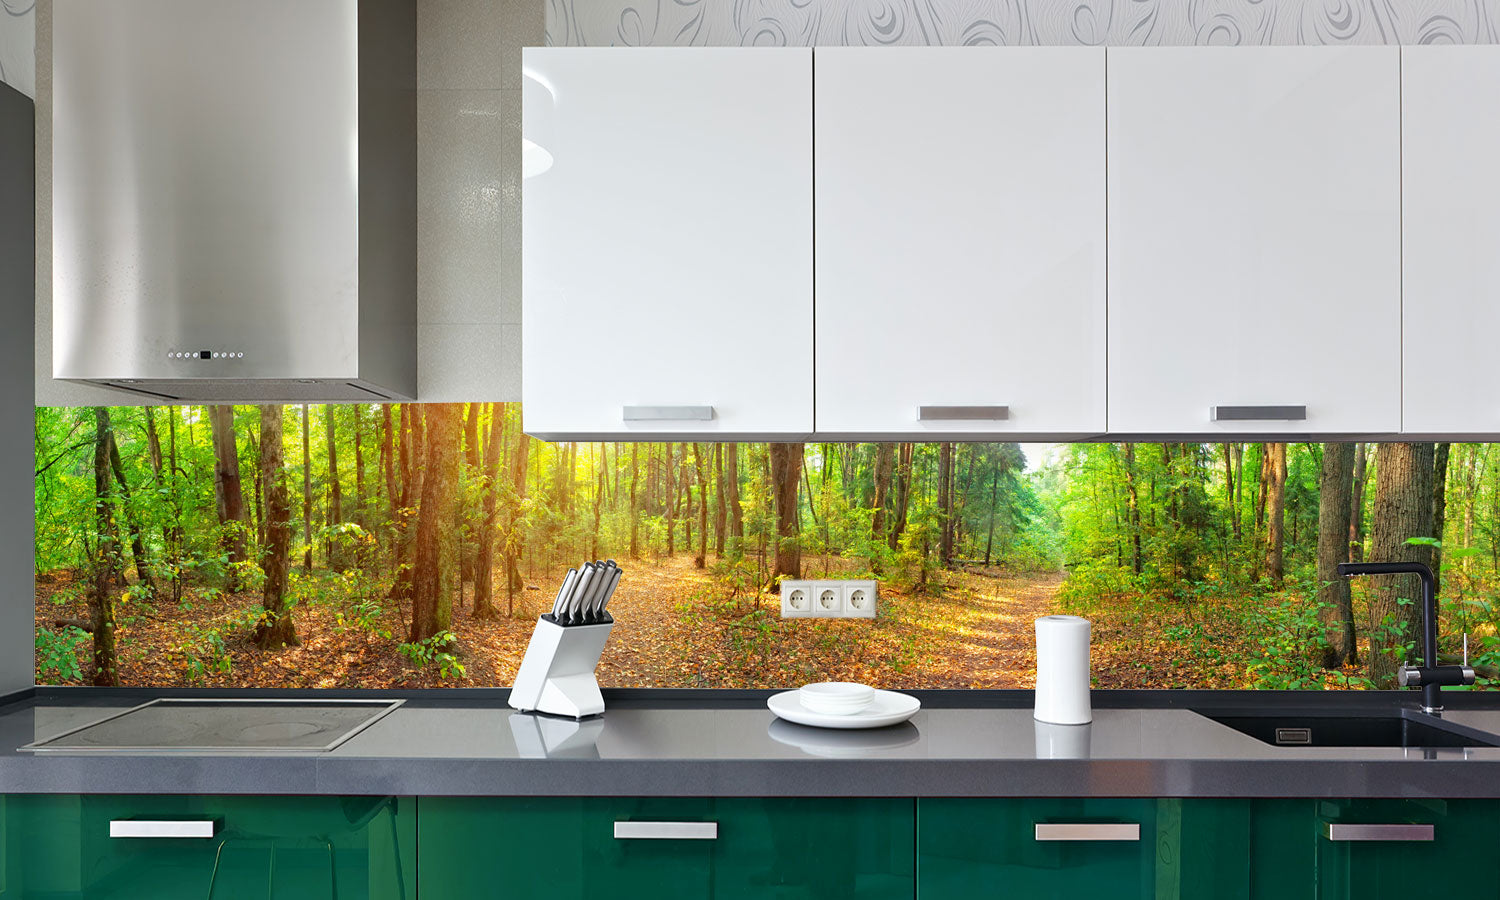 Paneli za kuhinje Forest -  Stakleni / PVC ploče / Pleksiglas -  sa printom za kuhinju, Zidne obloge PKU210